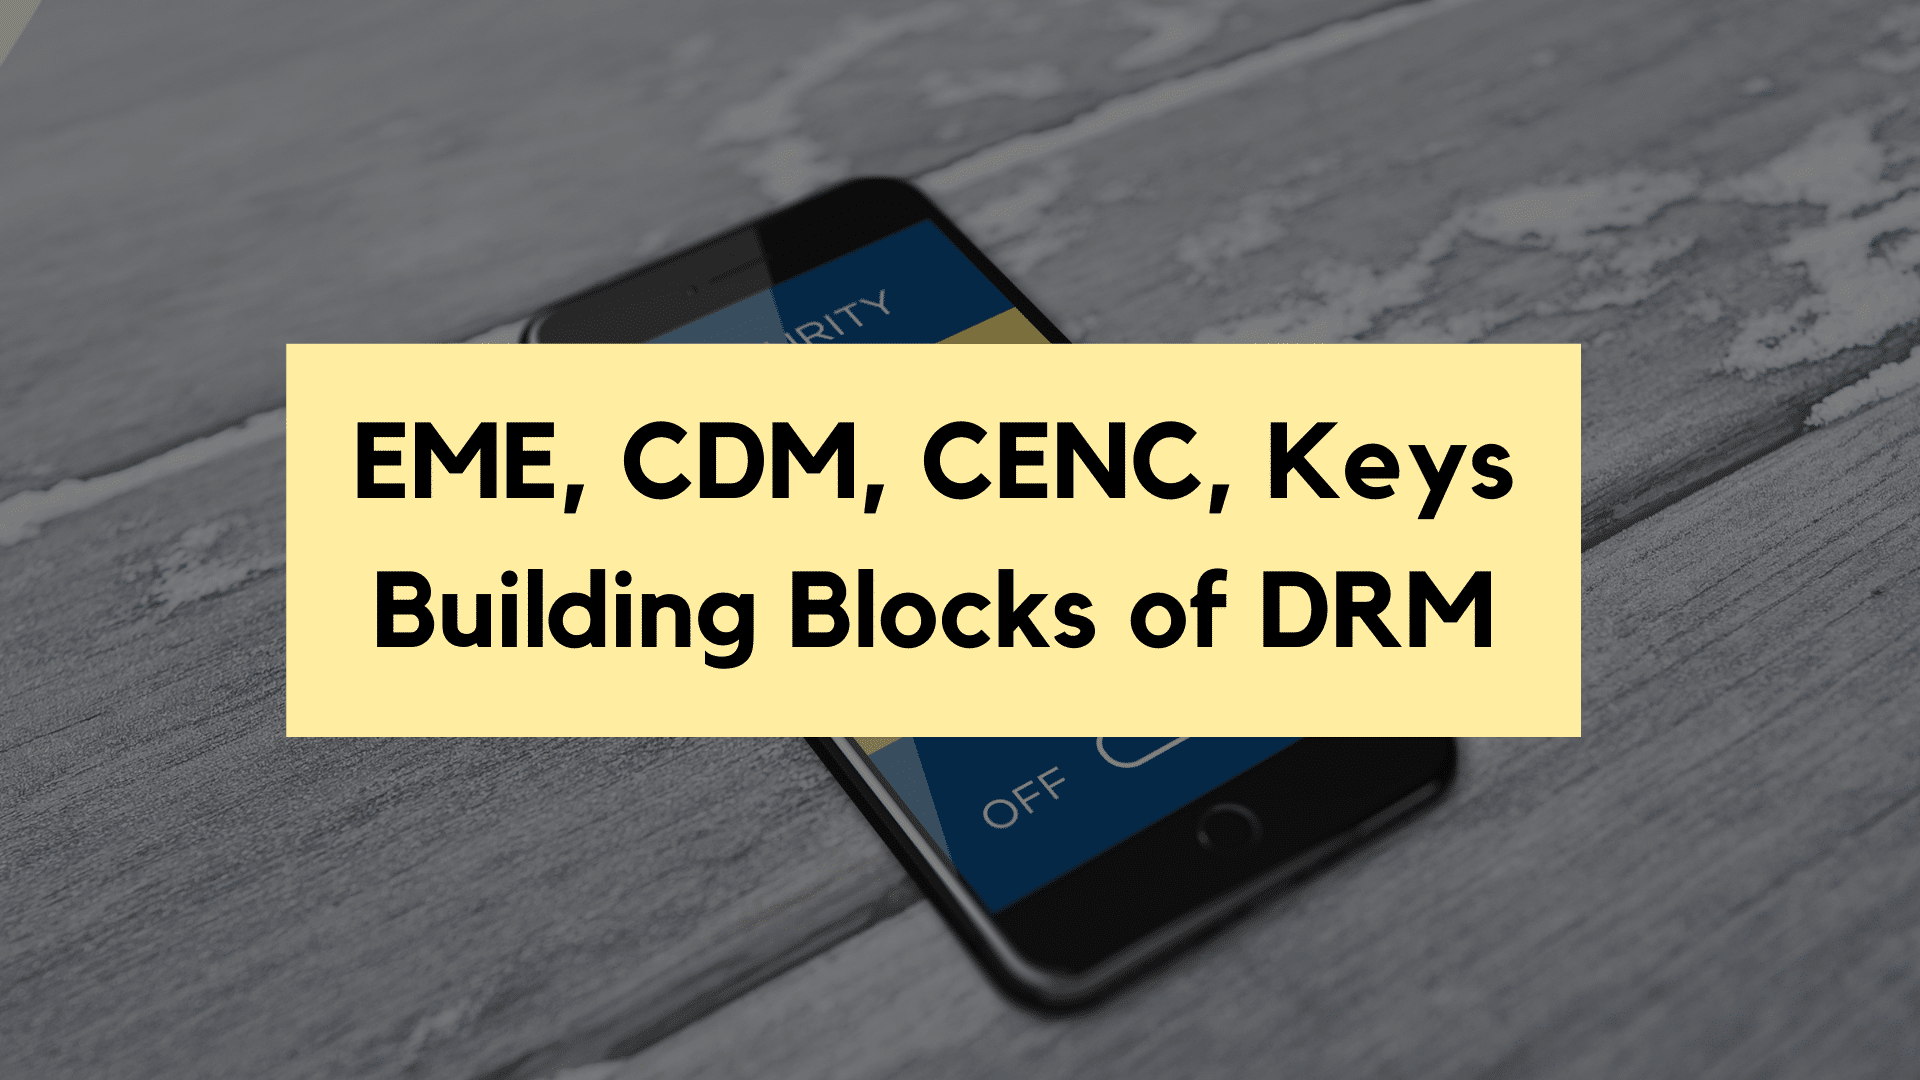 EME, CDM, AES, CENC, and Keys - The Essential Building Blocks of DRM